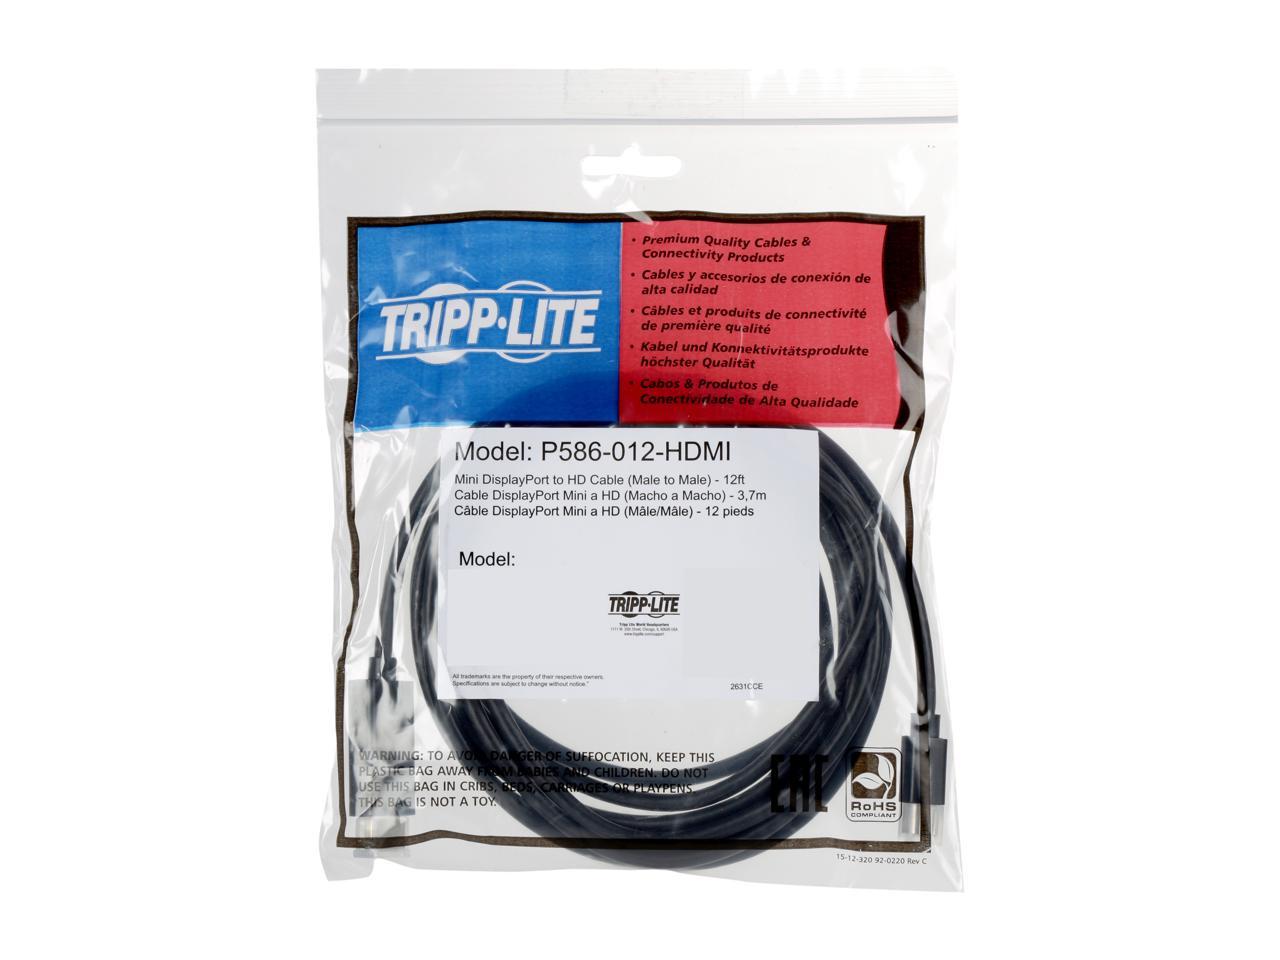 Tripp Lite Model P586-012-HDMI Mini-DisplayPort to HDMI Cable Adapter (M/M) Male to Male